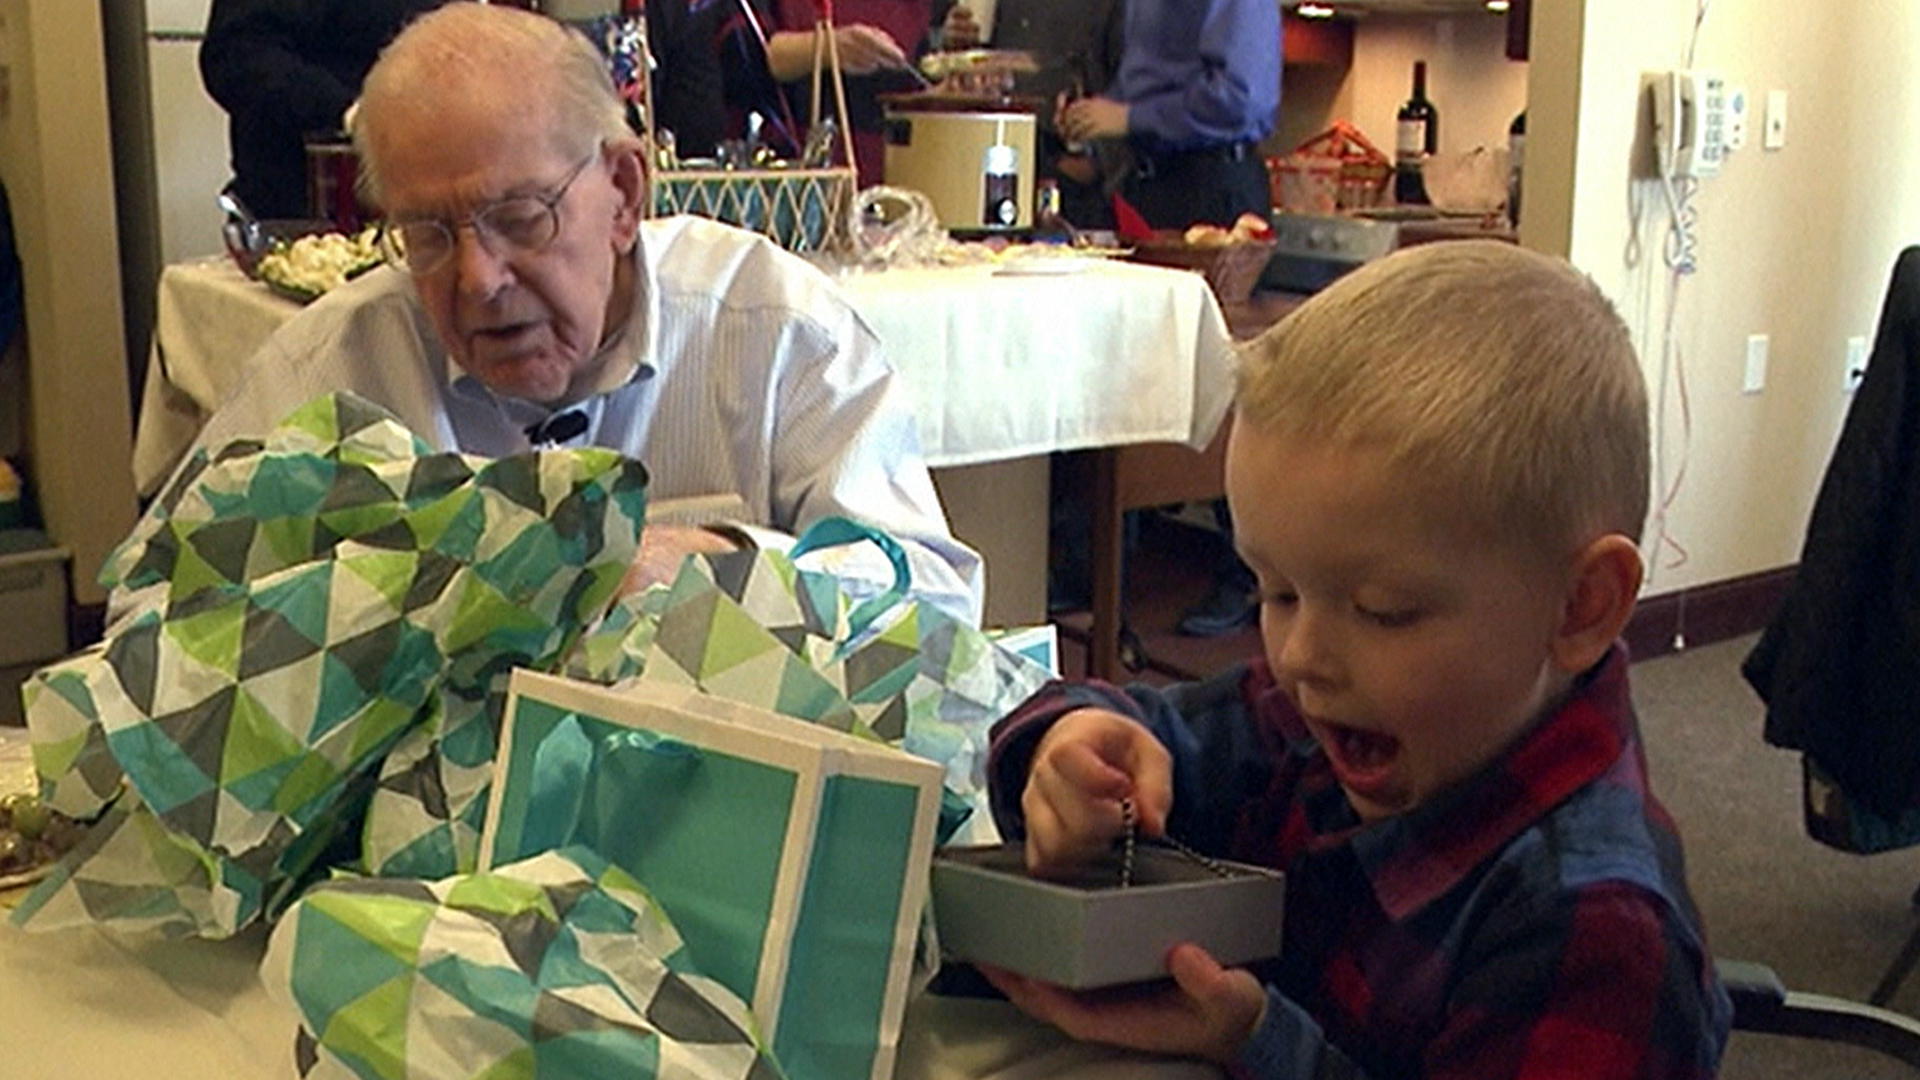 Reunited: Preschooler visits 90-year-old friend - TODAY.com1920 x 1080